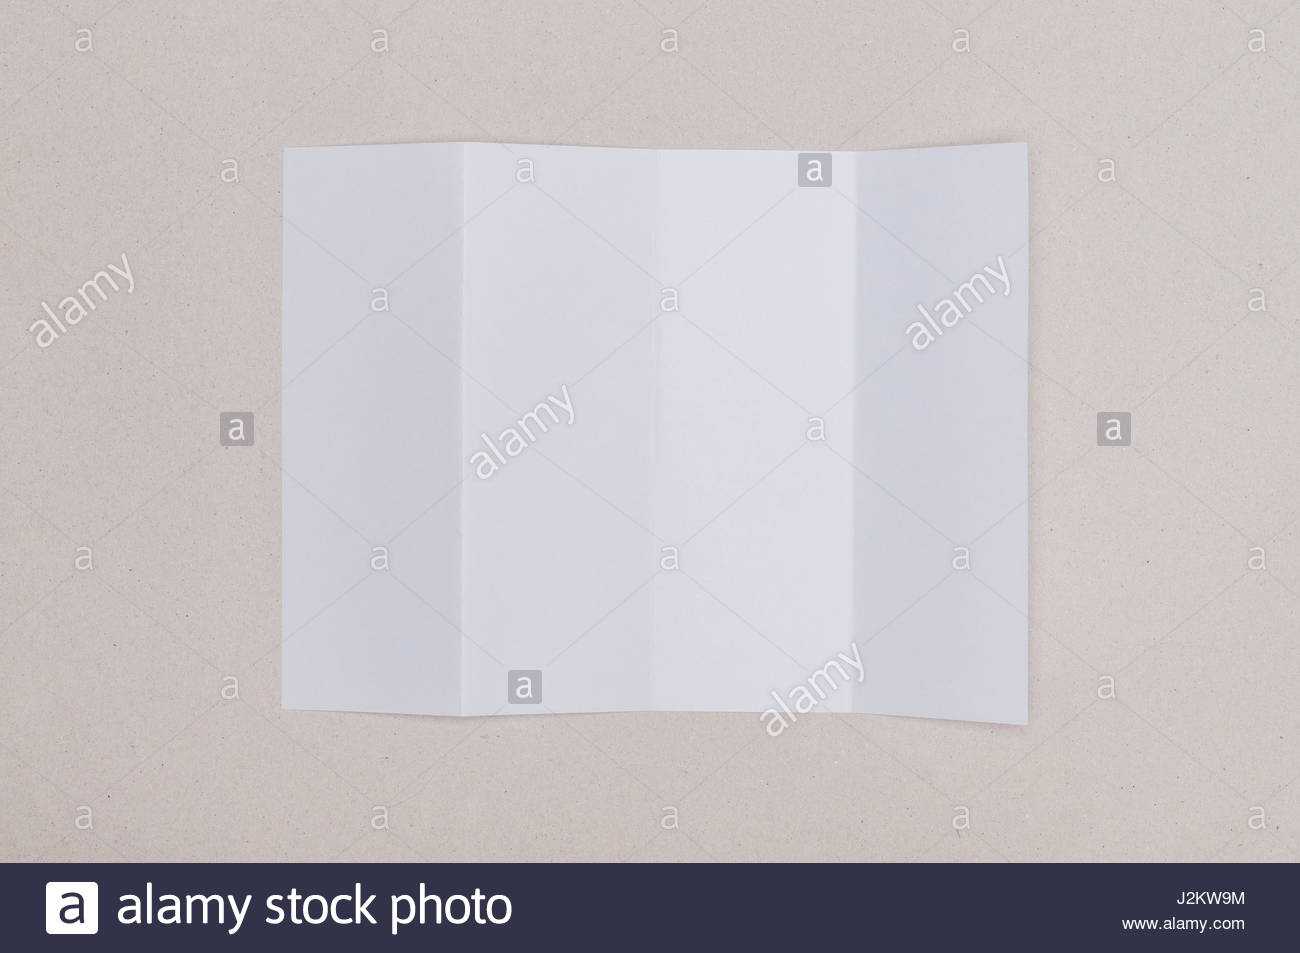 Tri Fold Card Stock Photos & Tri Fold Card Stock Images – Alamy In Tri Fold Tent Card Template